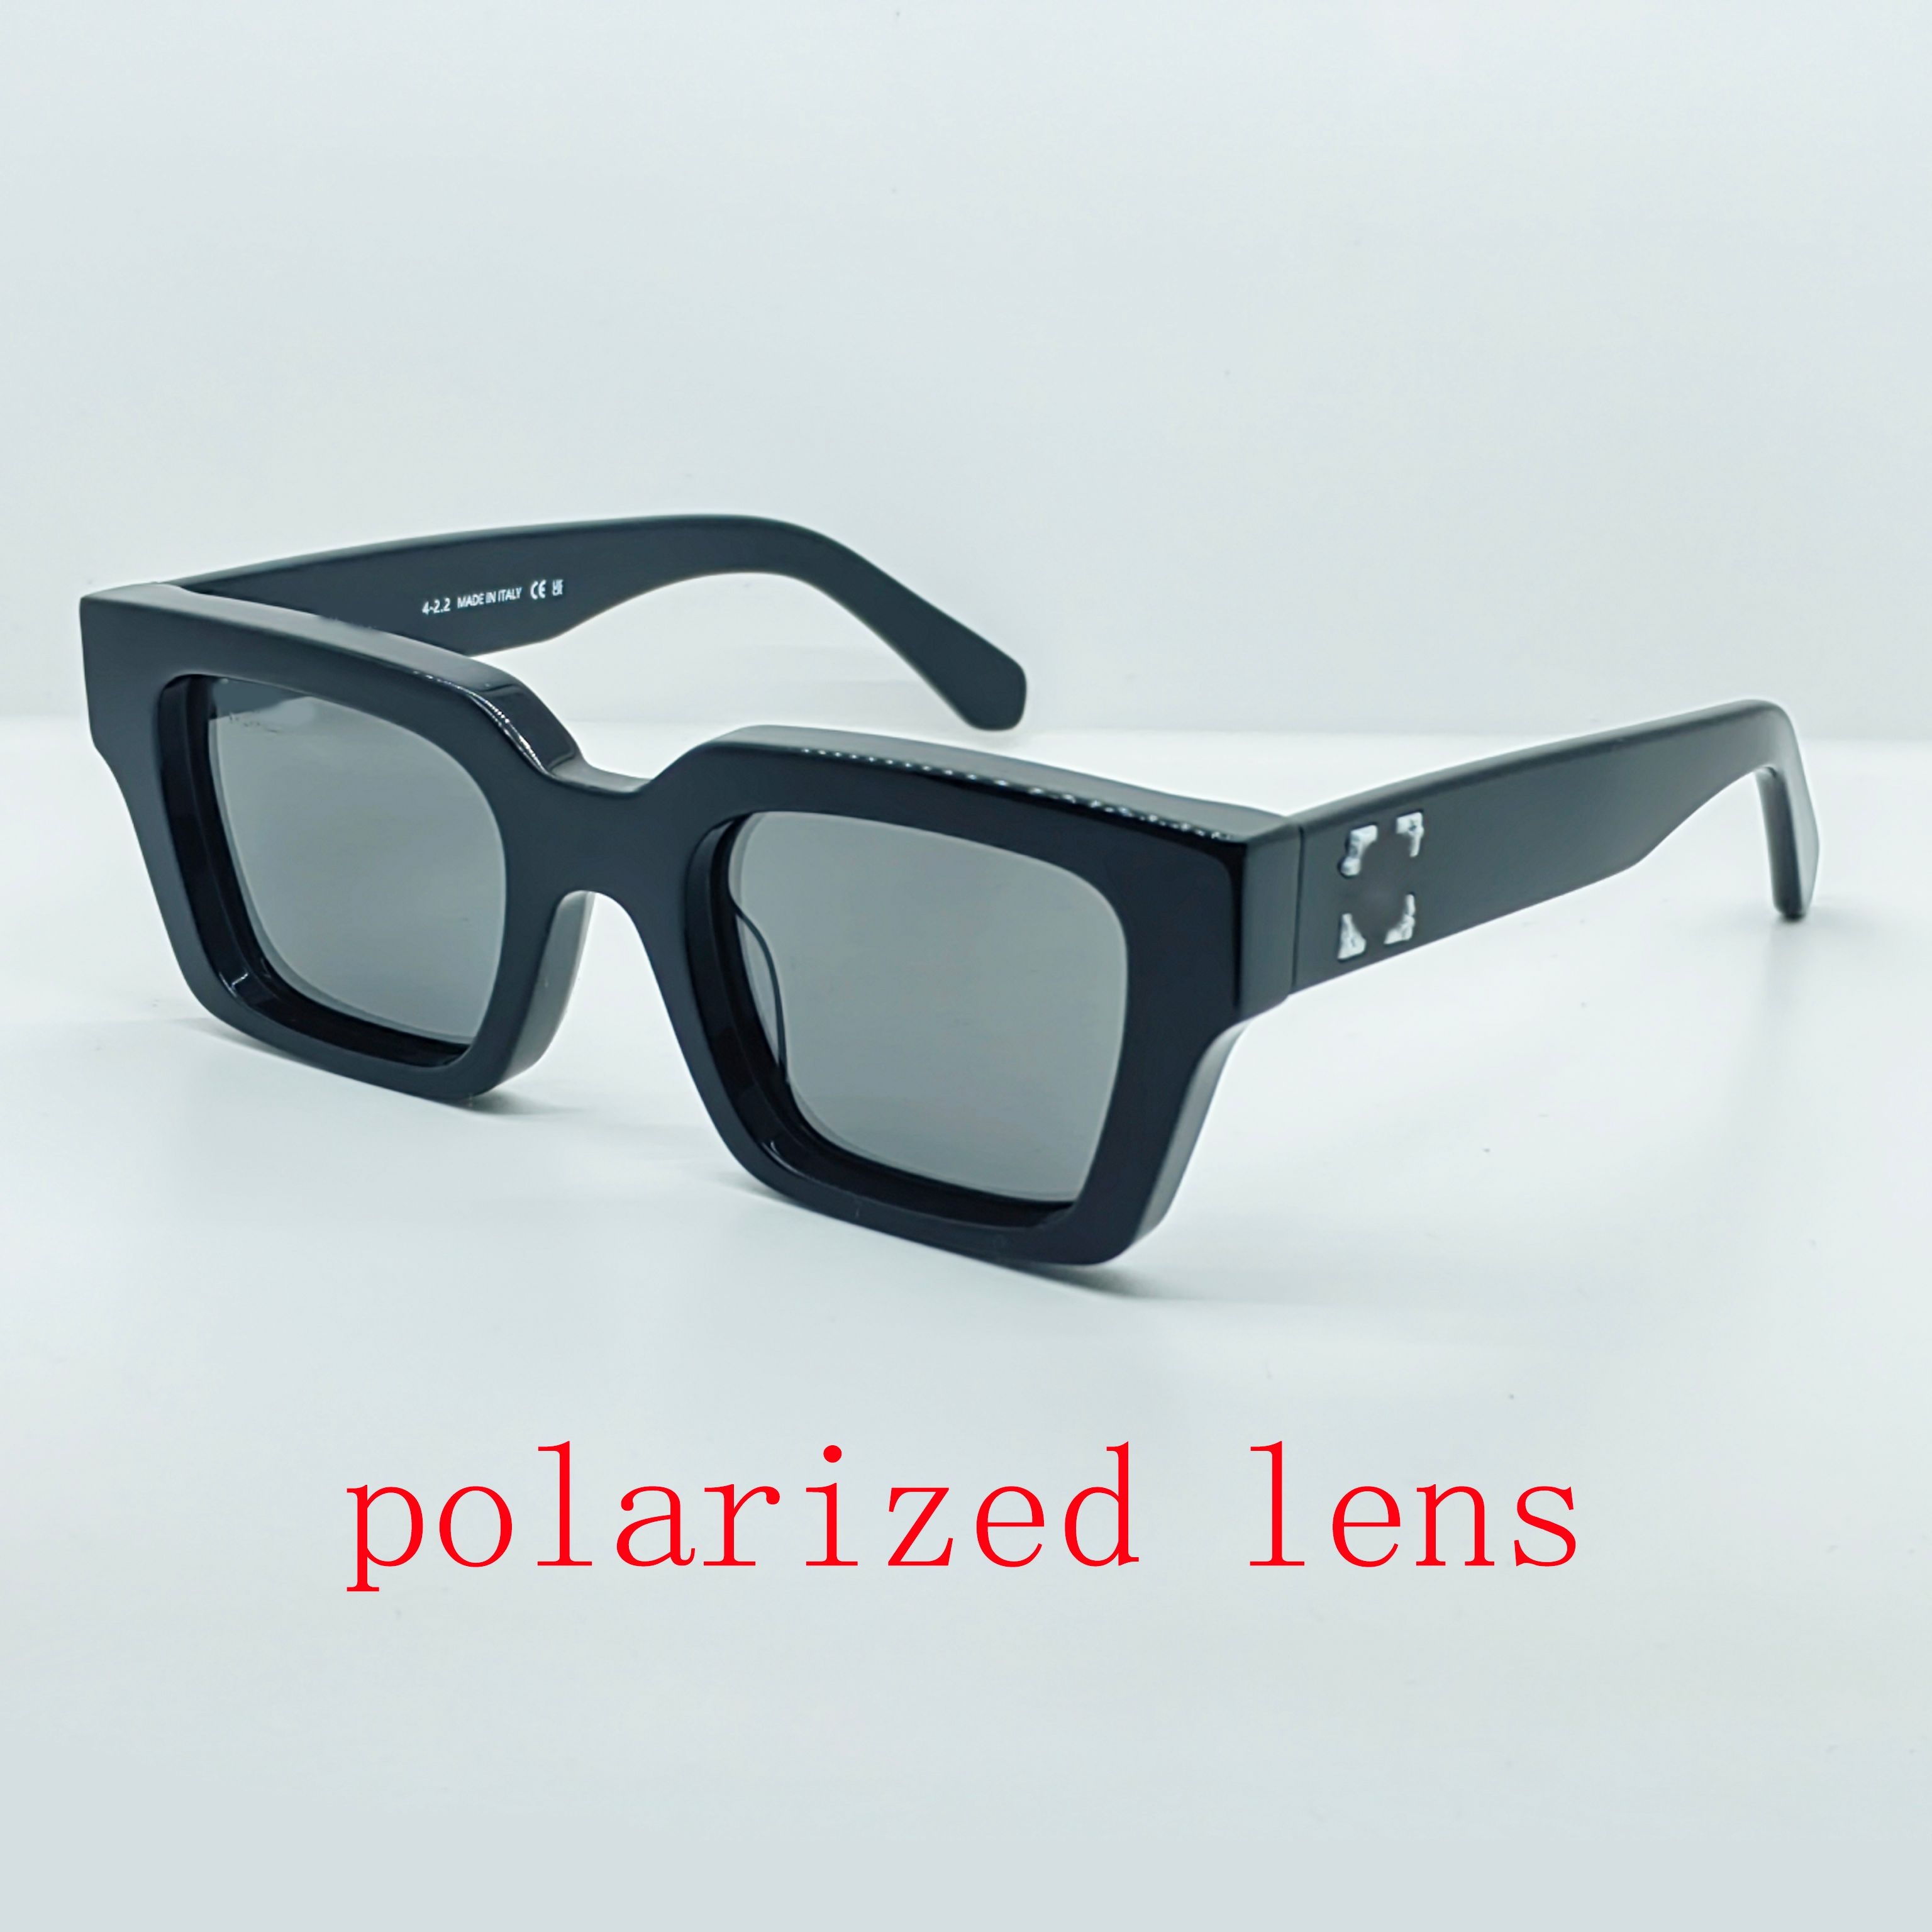 008 polarized lens